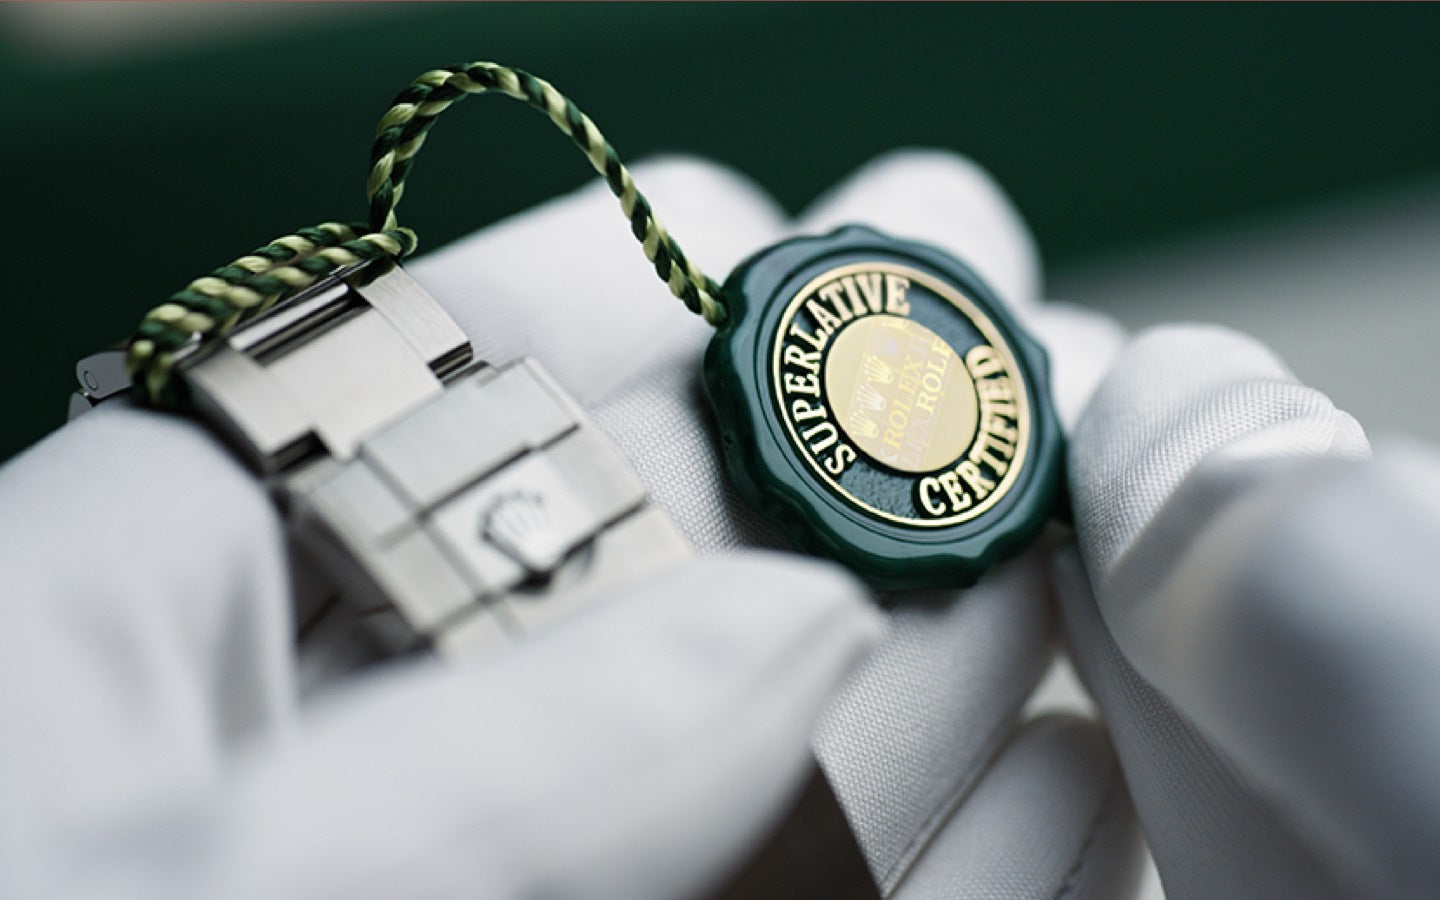 Rolex Superlative Certified Tag on Watch